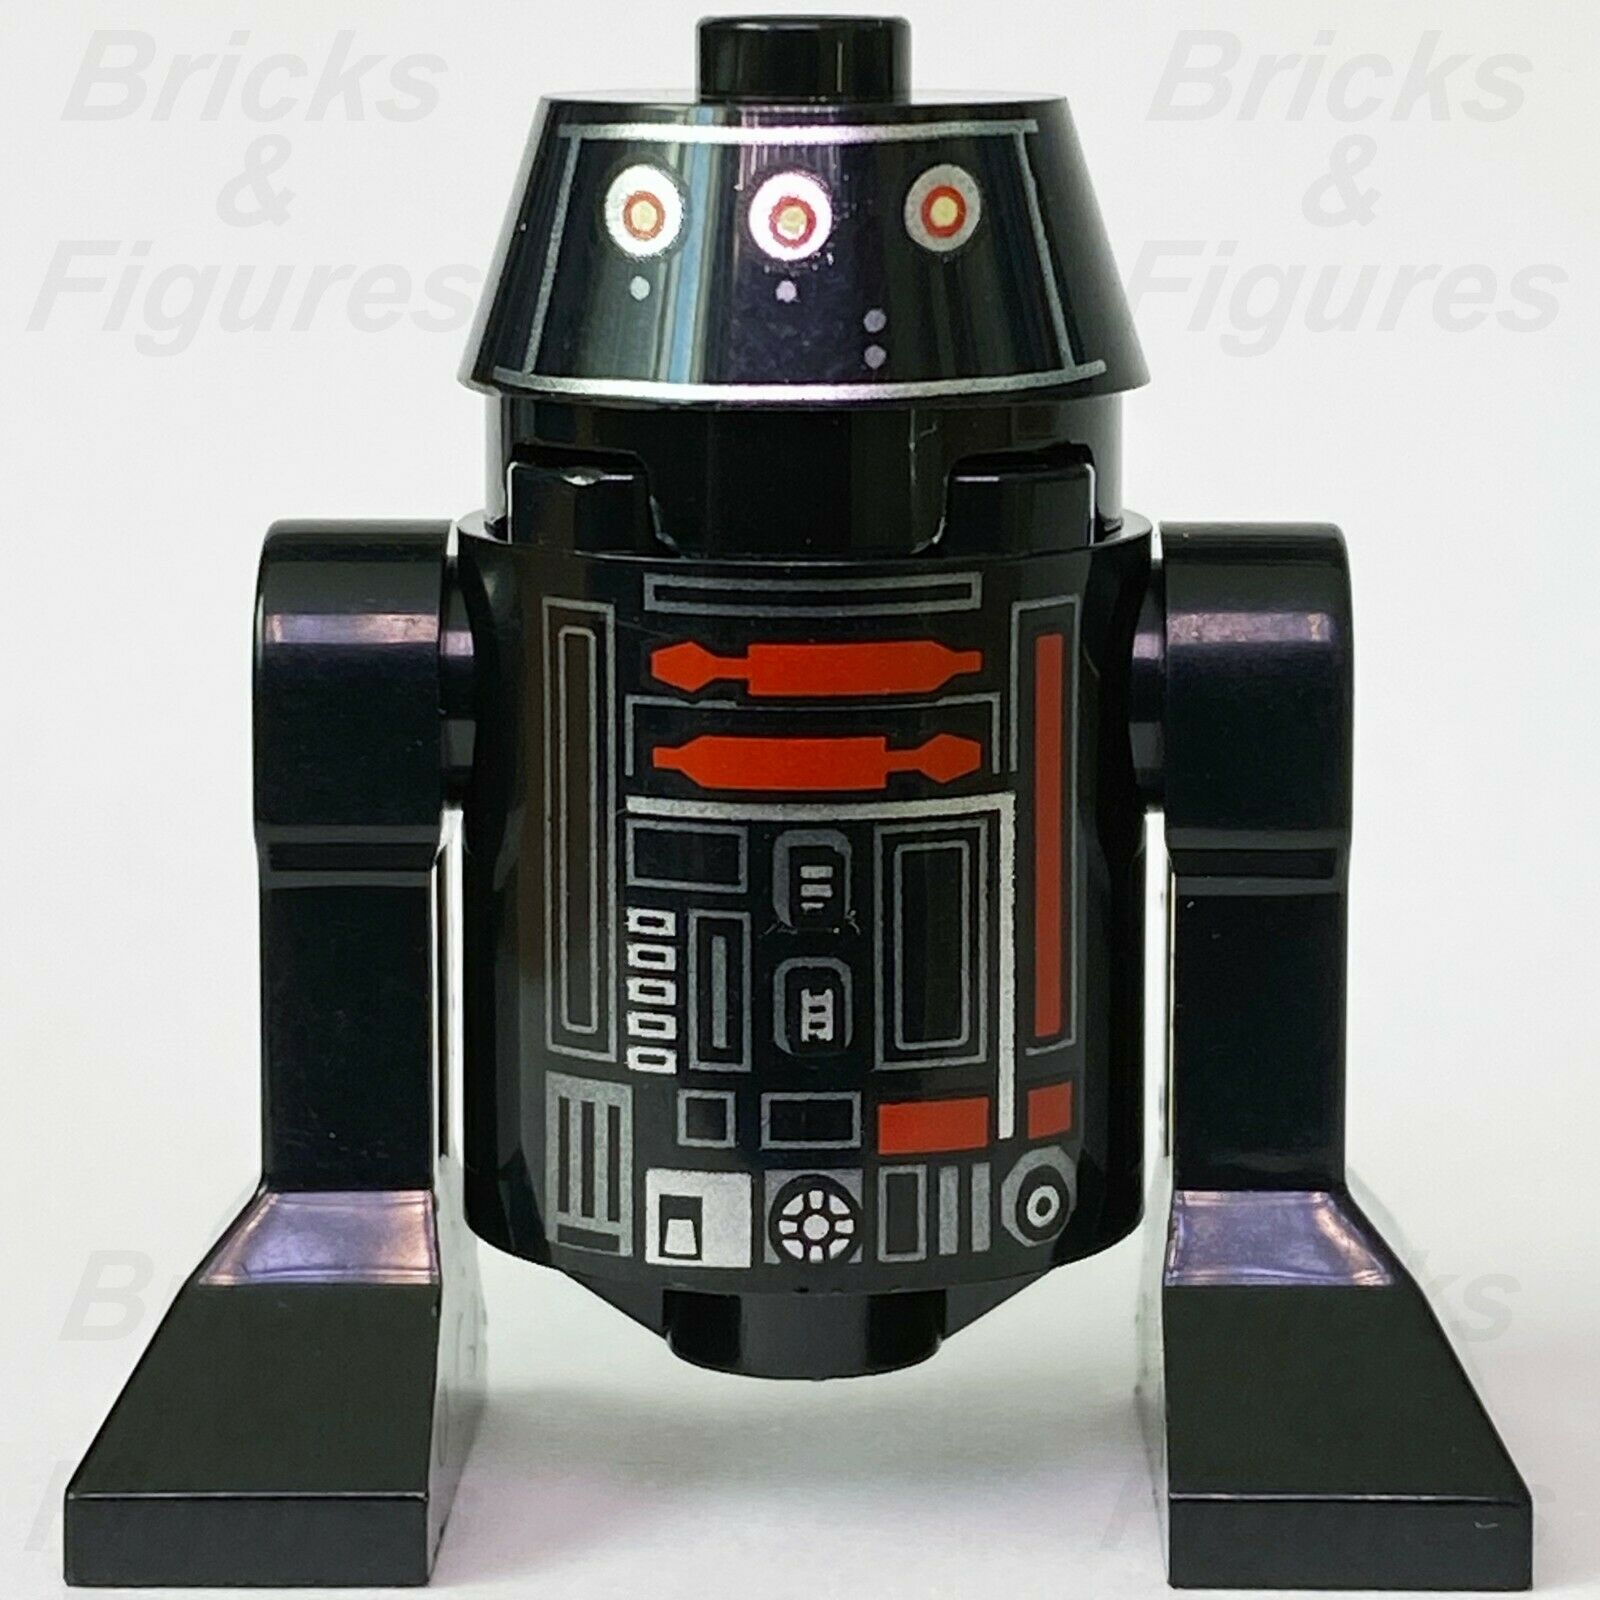 New Star Wars LEGO U5-GG Astromech Droid Galaxy's Edge Minifigure 75293 - Bricks & Figures